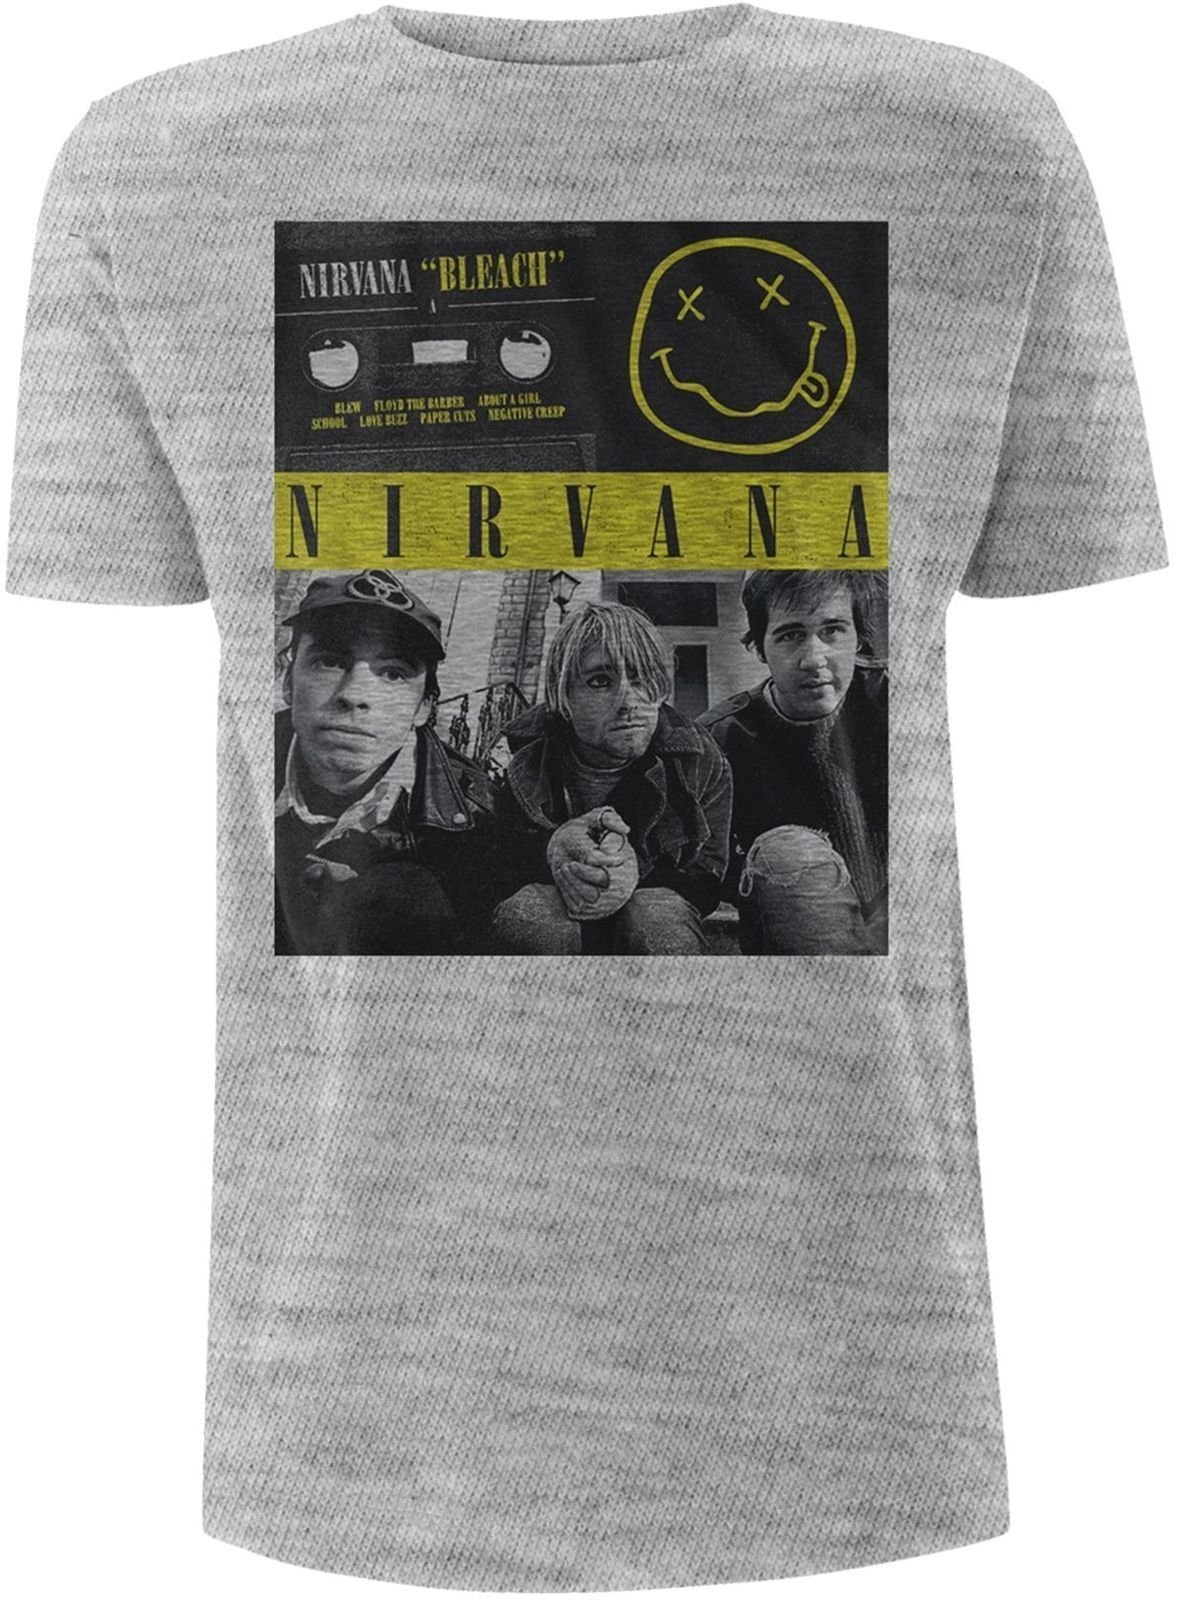 T-shirt Nirvana T-shirt Bleach Tape Homme Grey L